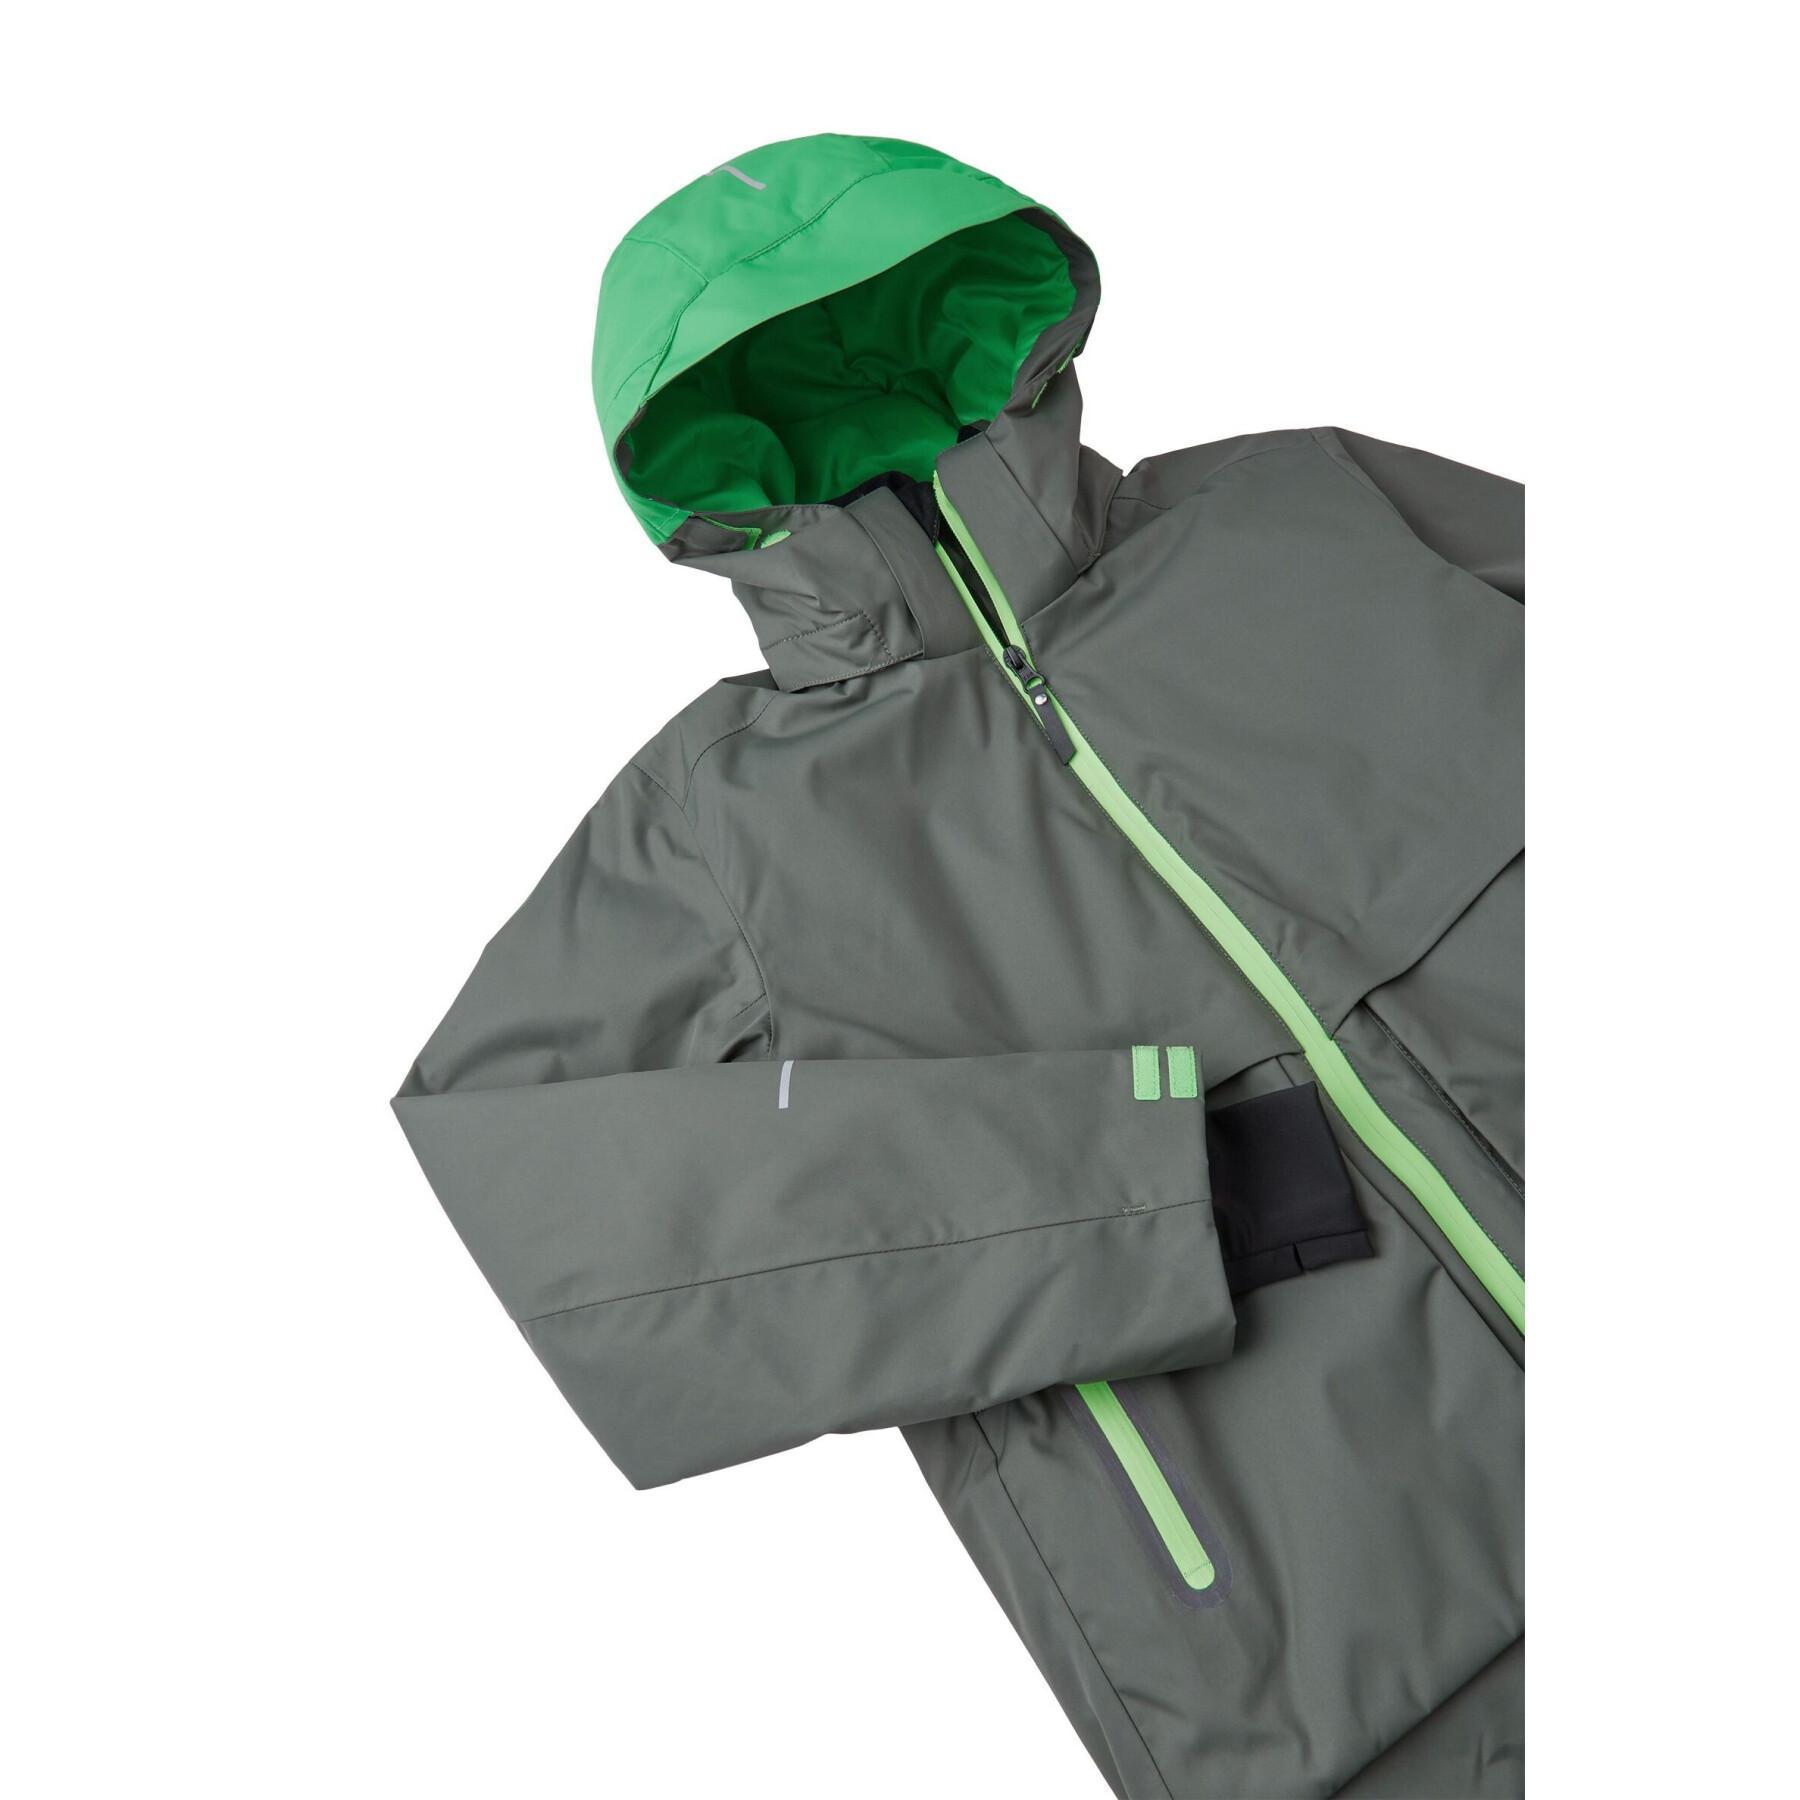 Waterproof jacket for children Reima Reima tec Tirro